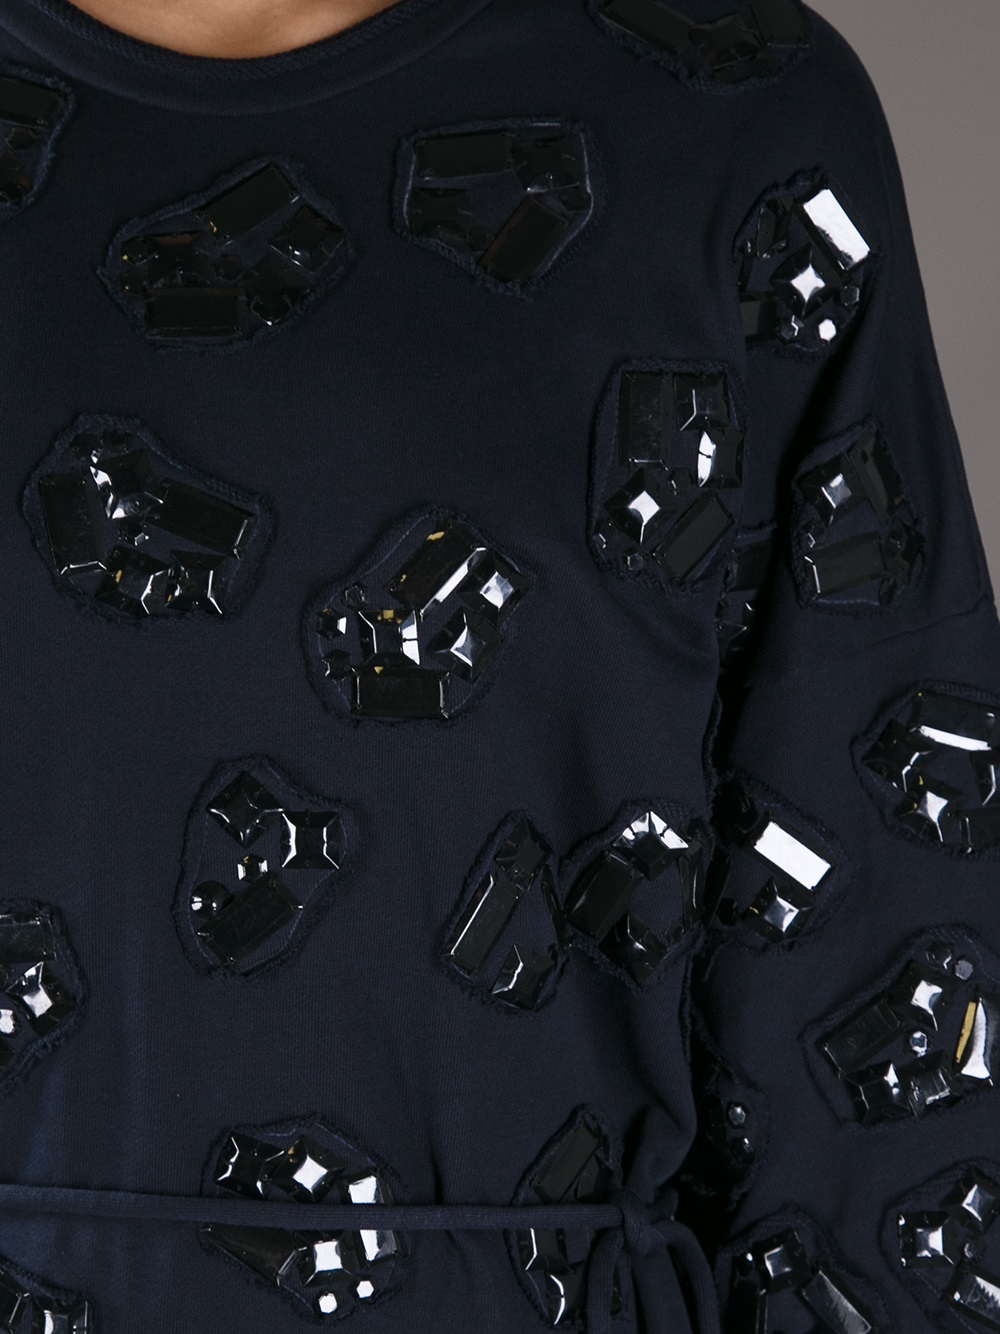 Lanvin Embellished Kimono Sleeve Dress in Black | Lyst